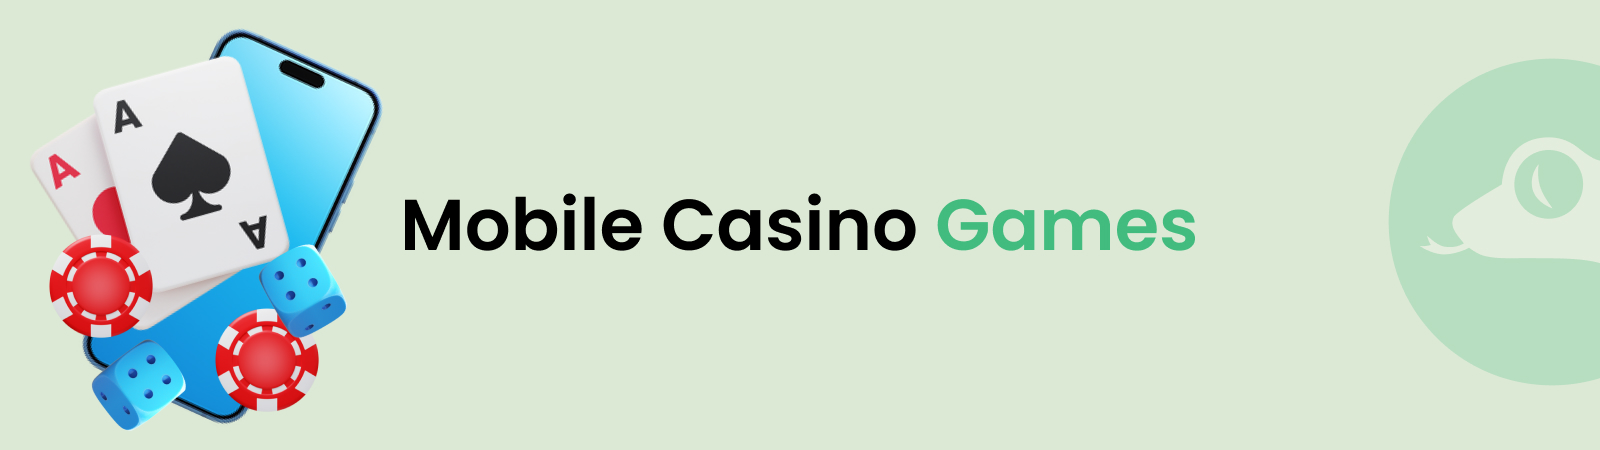 uk mobile casino games